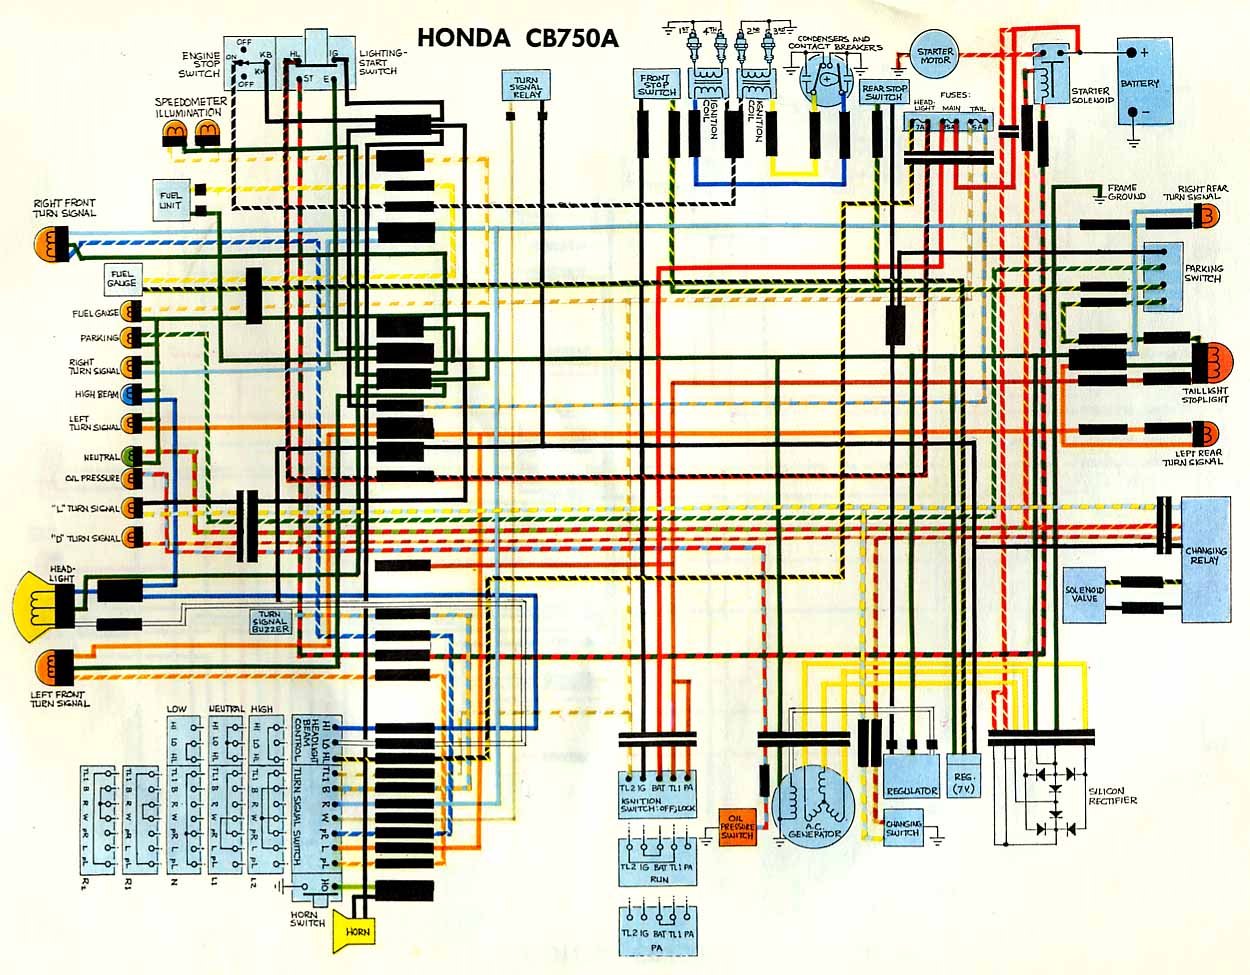 Honda spirit 750 electrical diagram #2